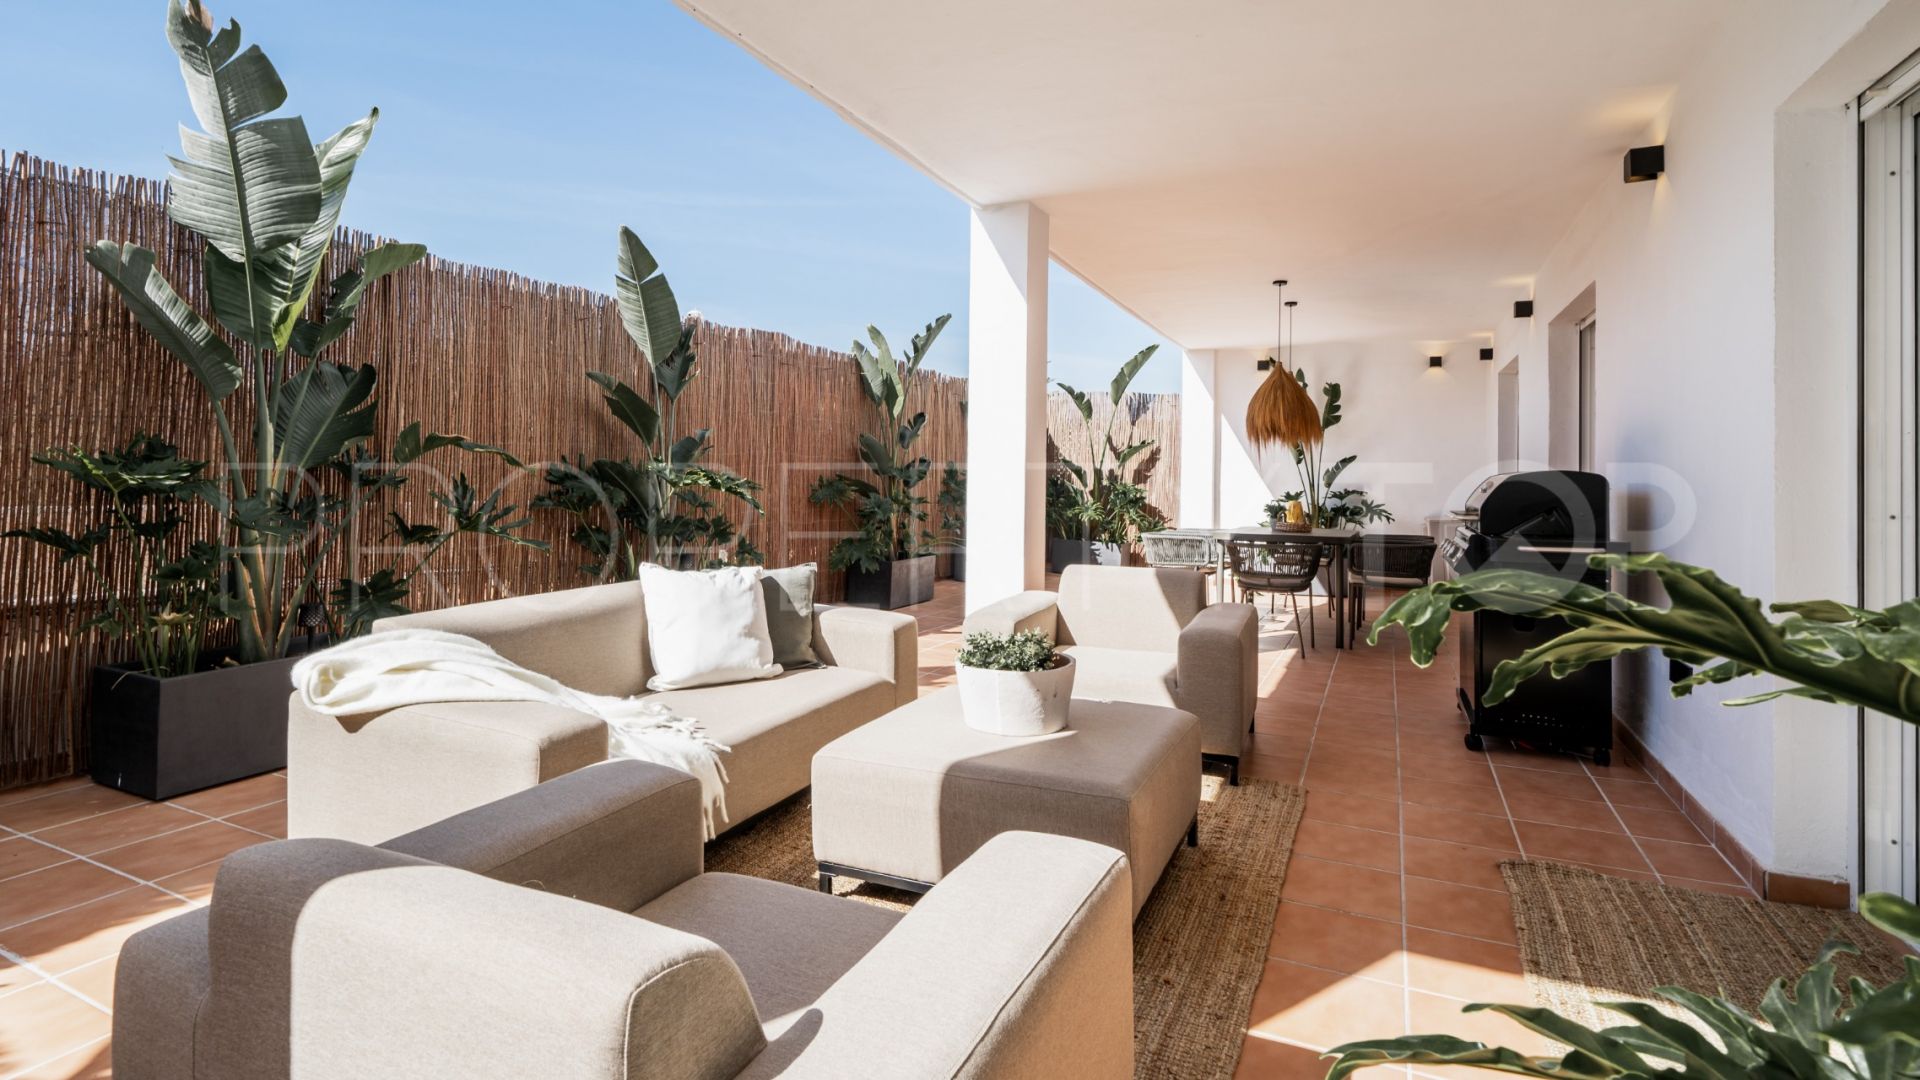 Jardines de Andalucia apartment for sale